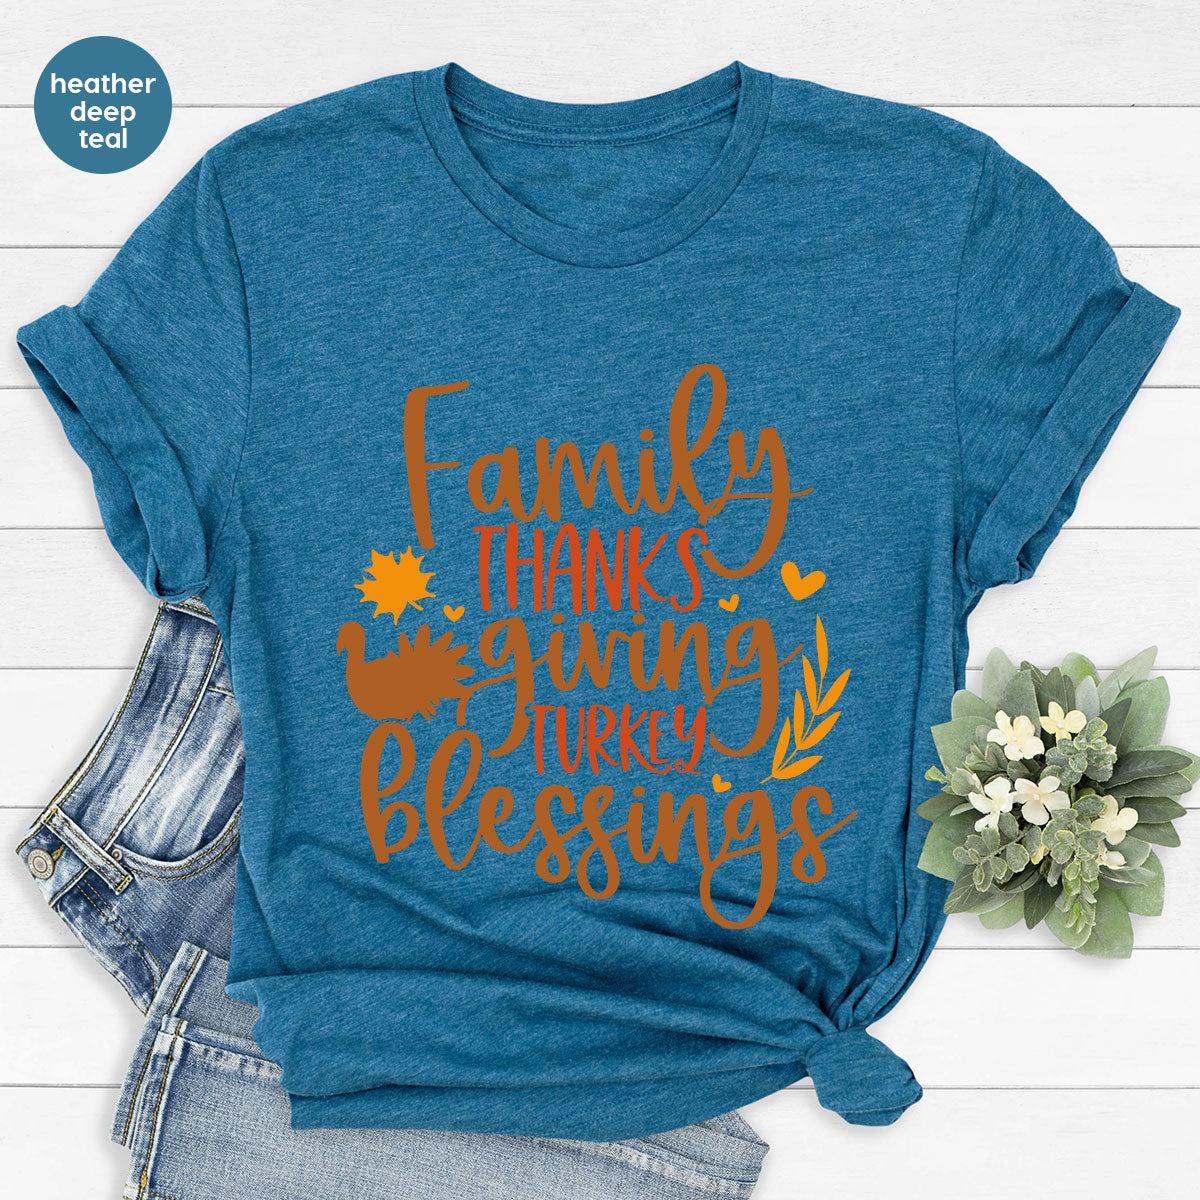 Family Thanksgiving Shirts, Gifts for Family, Autumn Crewneck Sweatshirt, Matching Family TShirts, Fall Vneck Tshirt, Turkey Graphic Tees